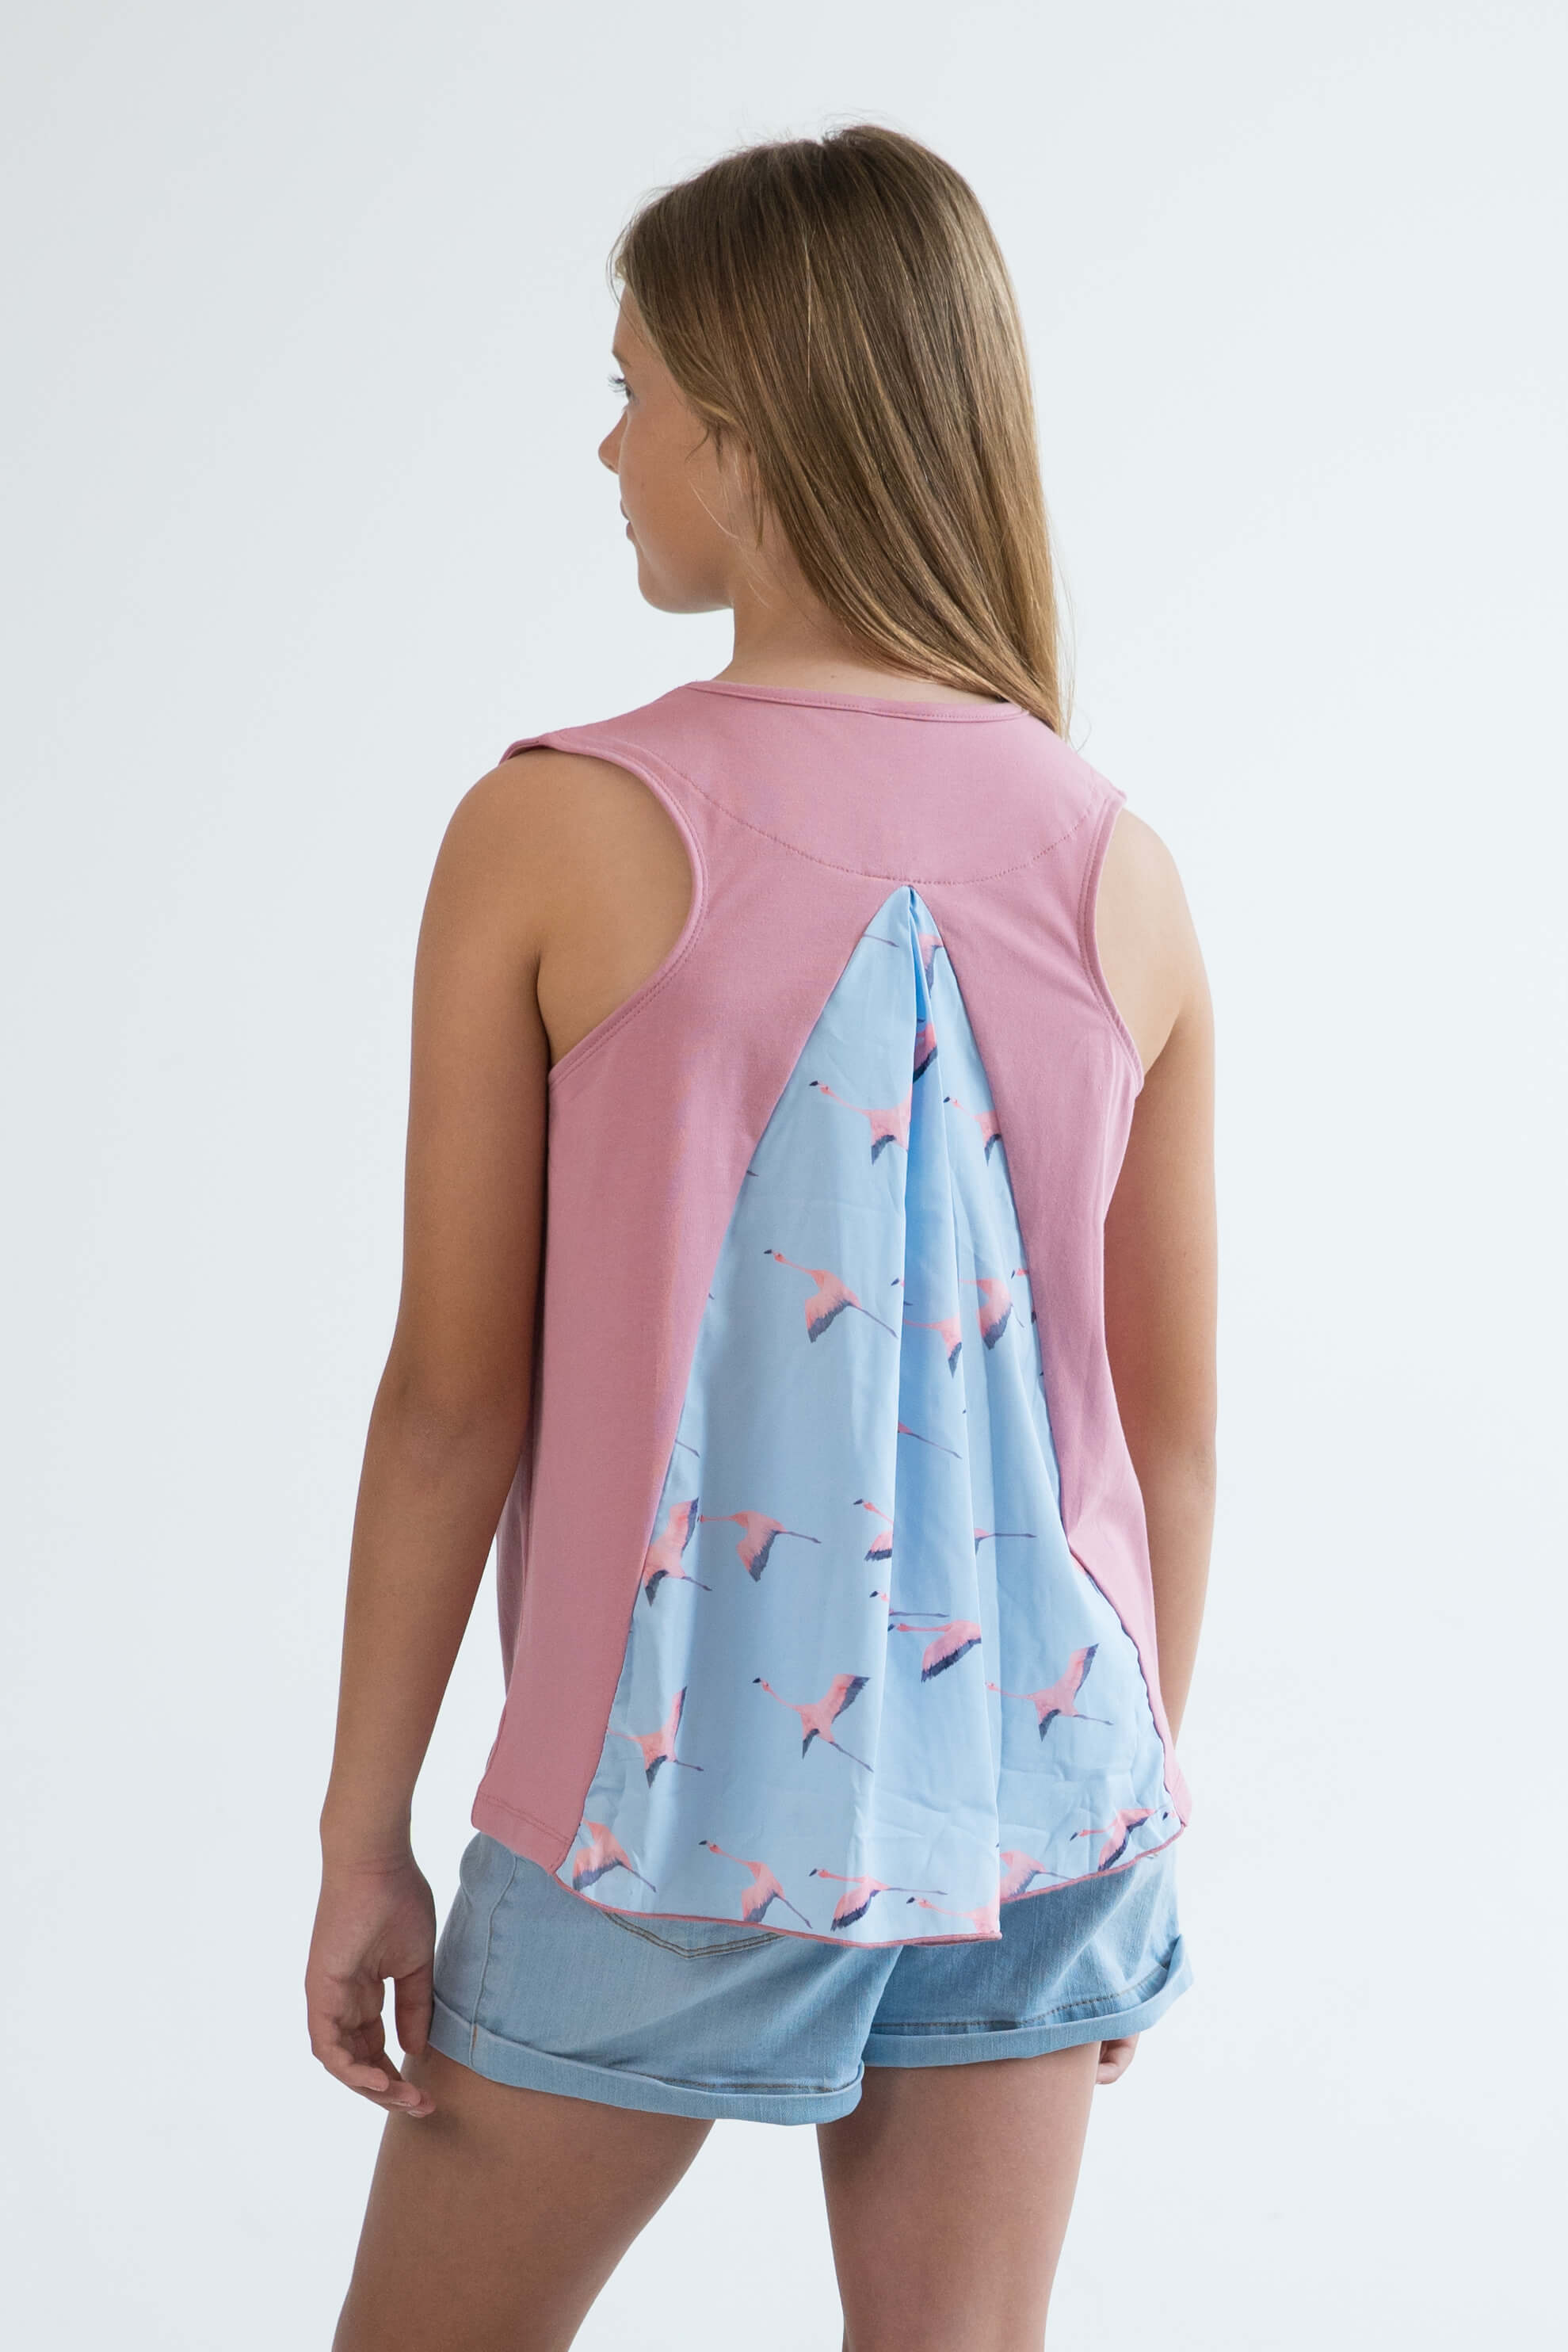 pink teen girls clothing sleeveless singlet top flamingo print by Love Haidee Australia racer back